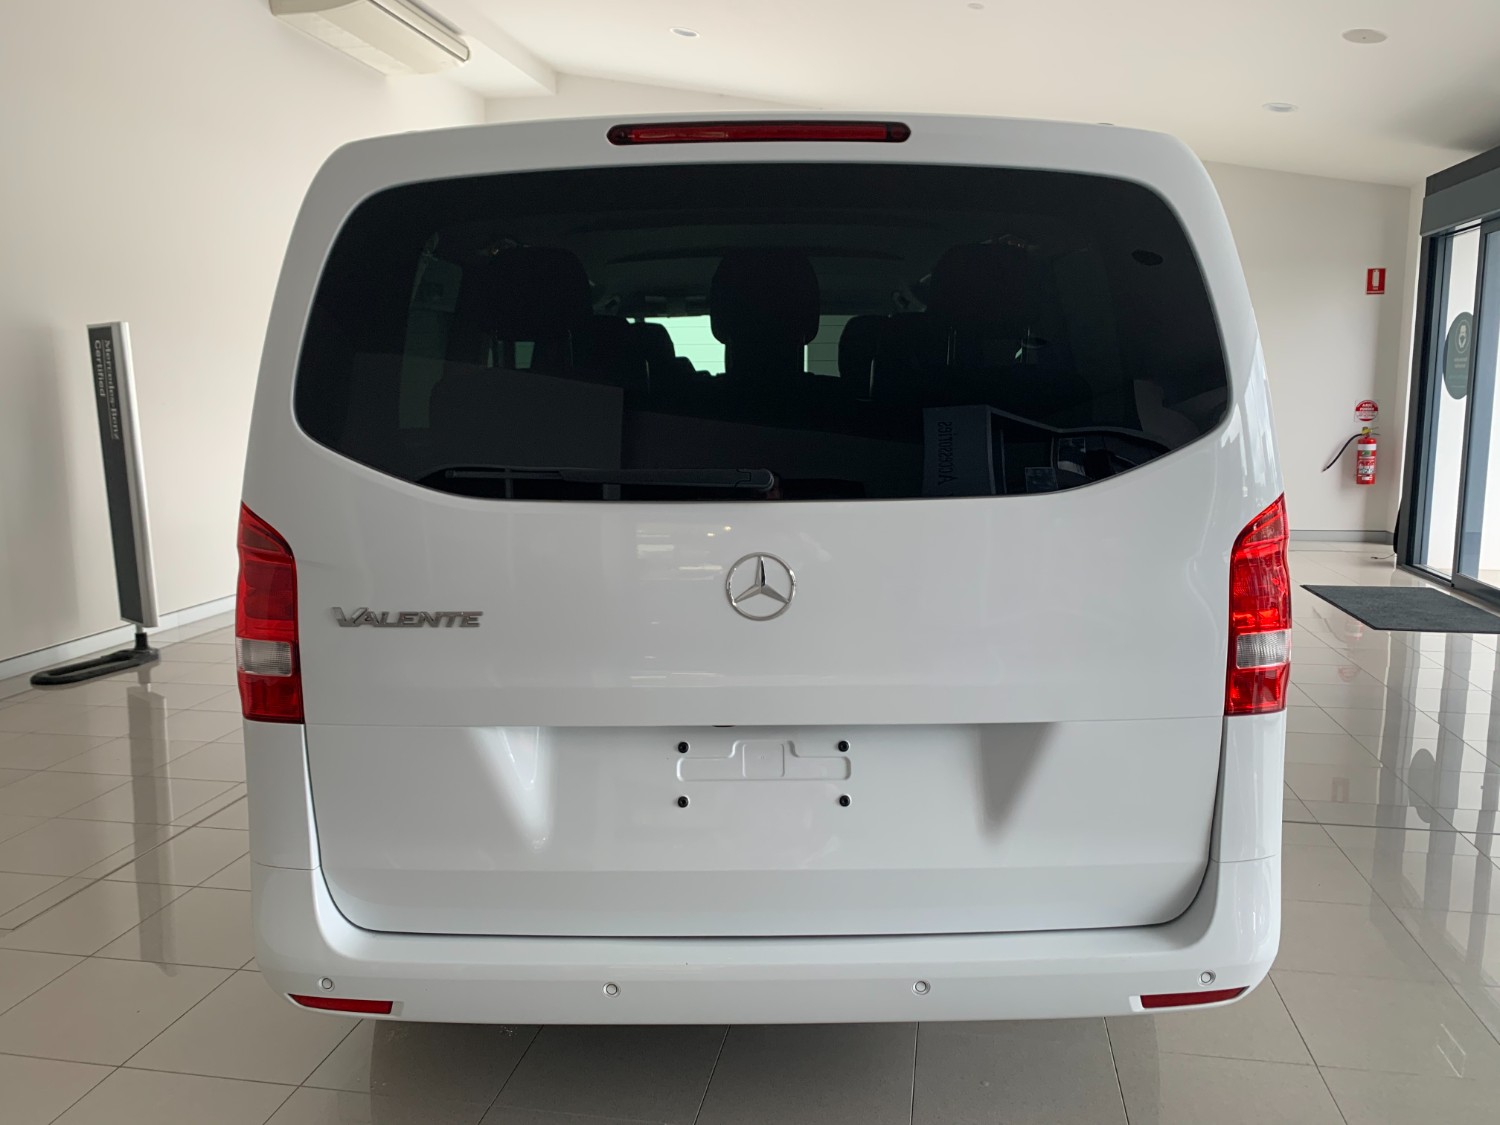 2019 Mercedes-Benz Valente 447 116BlueTEC Wagon Image 12